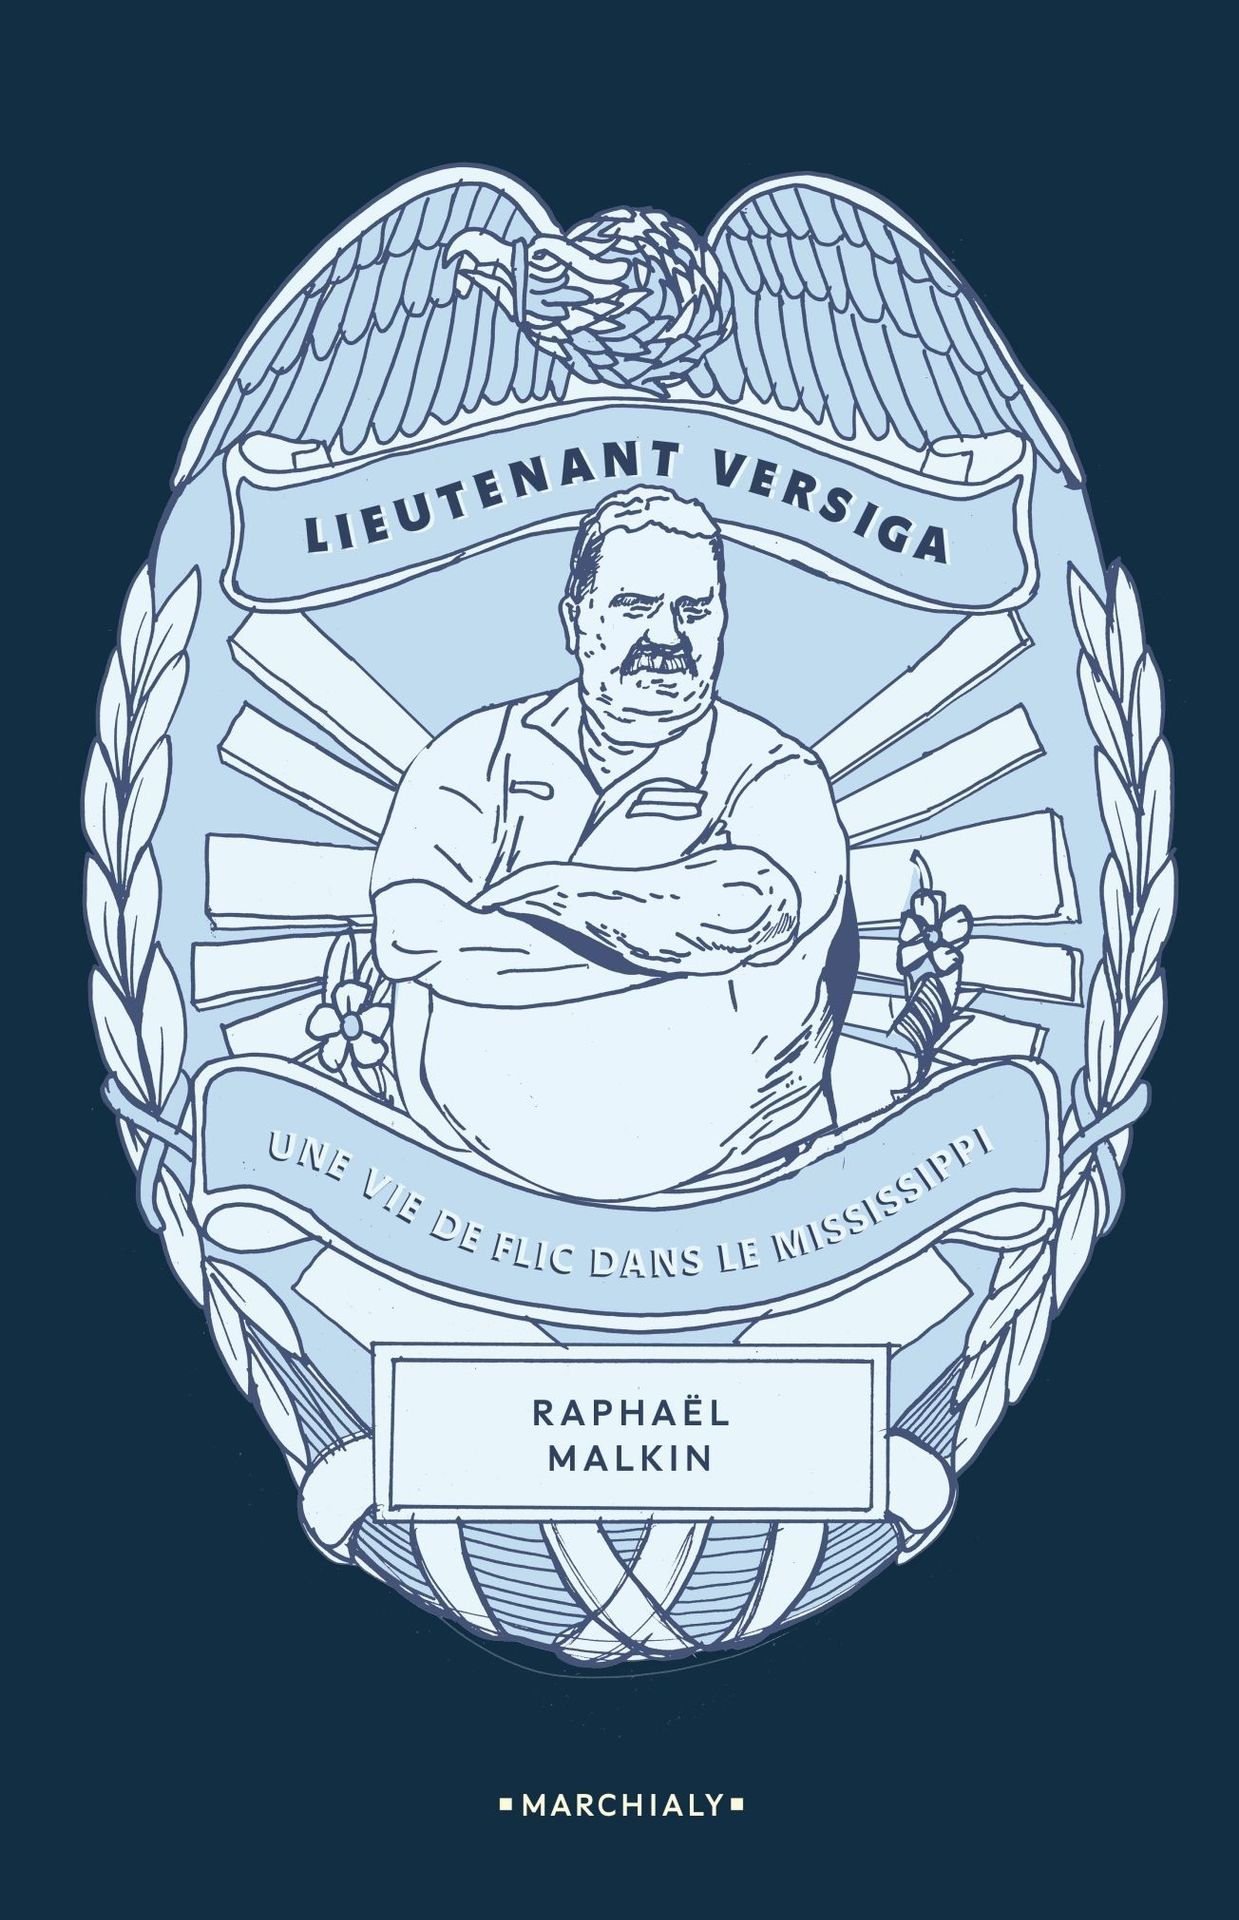 "Lieutenant Versiga" de Raphaël Malkin